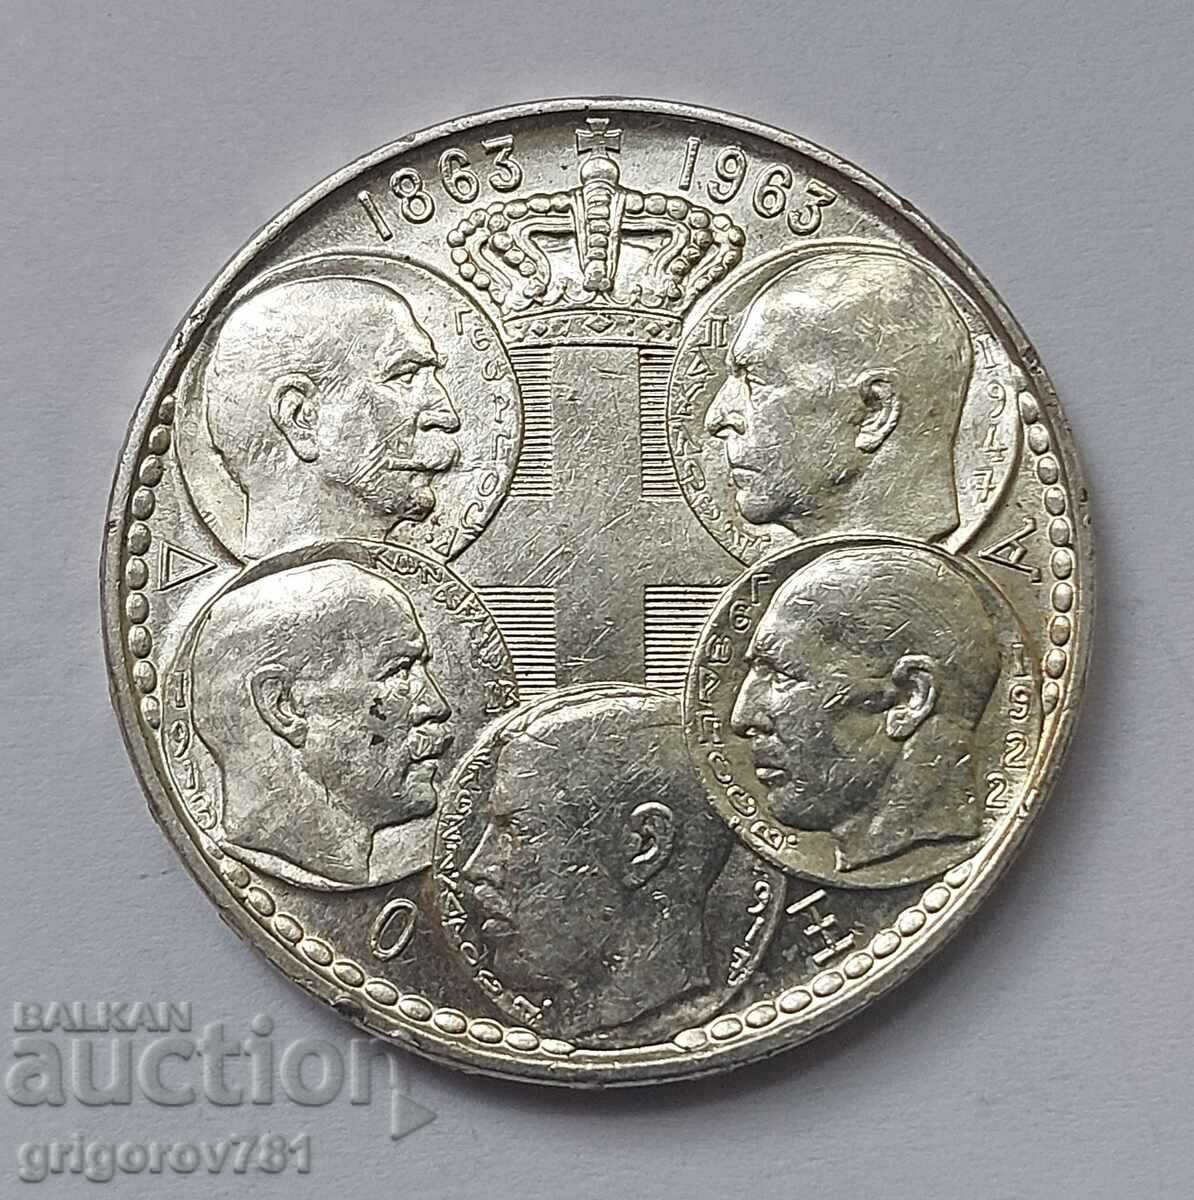 30 drahme argint 1963 - monedă de argint #12